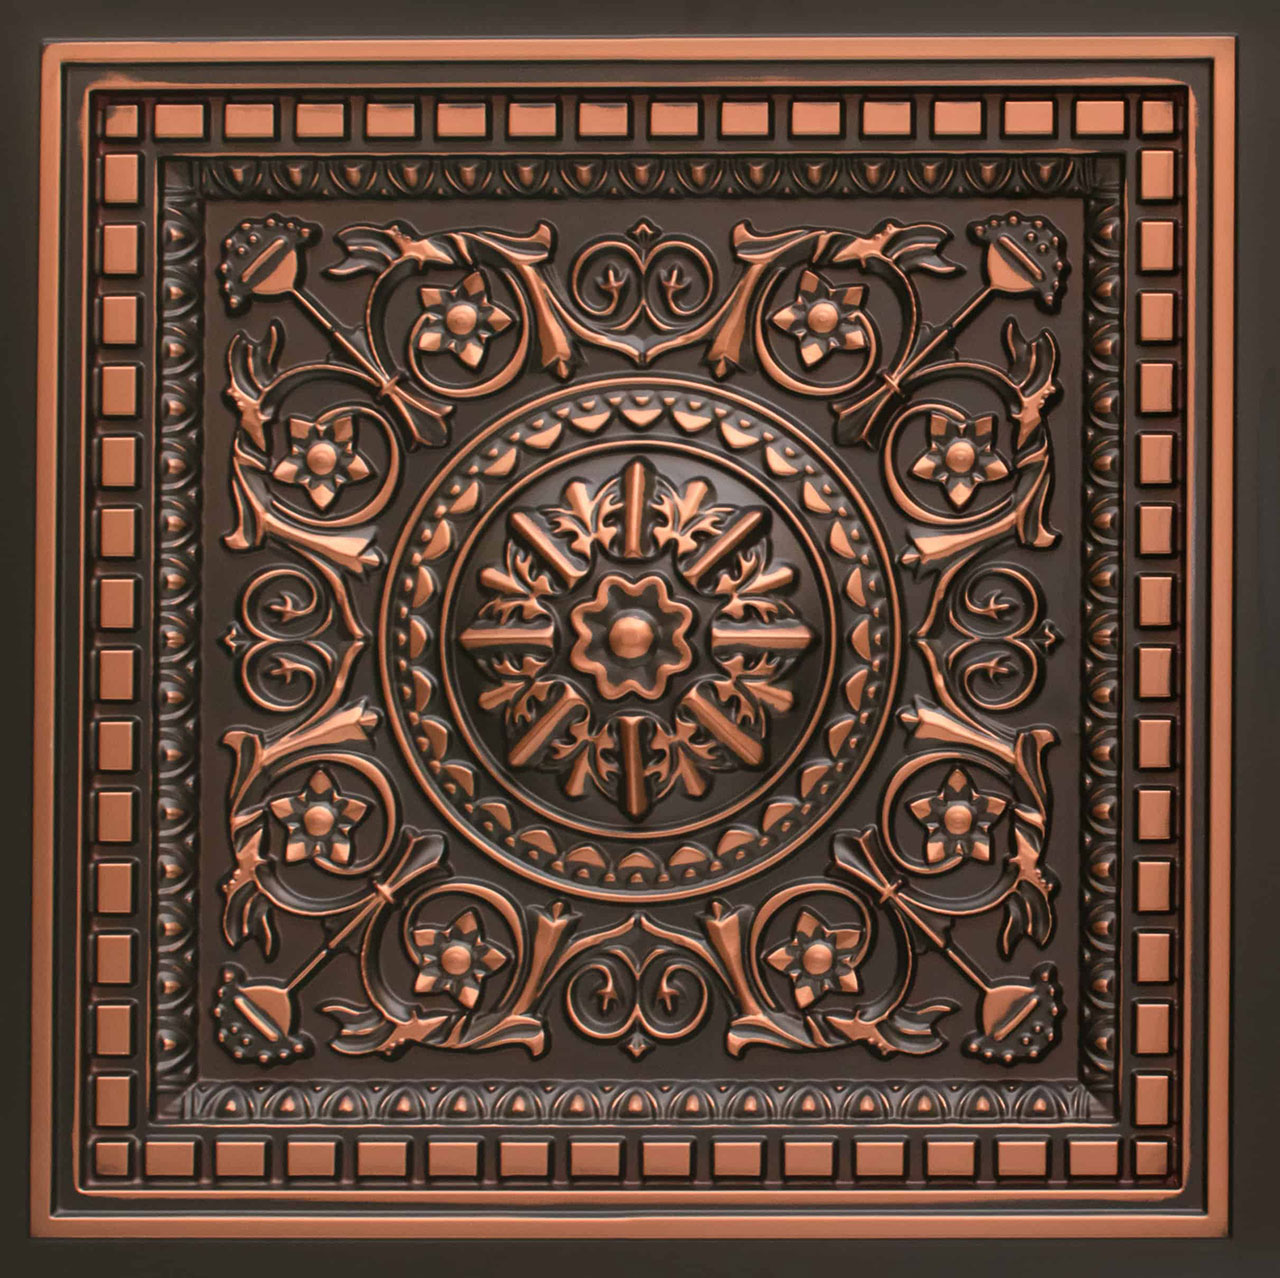 Da Vinci - Faux Tin - Coffered DropCeiling Tile - 2ft x 2ft - #215